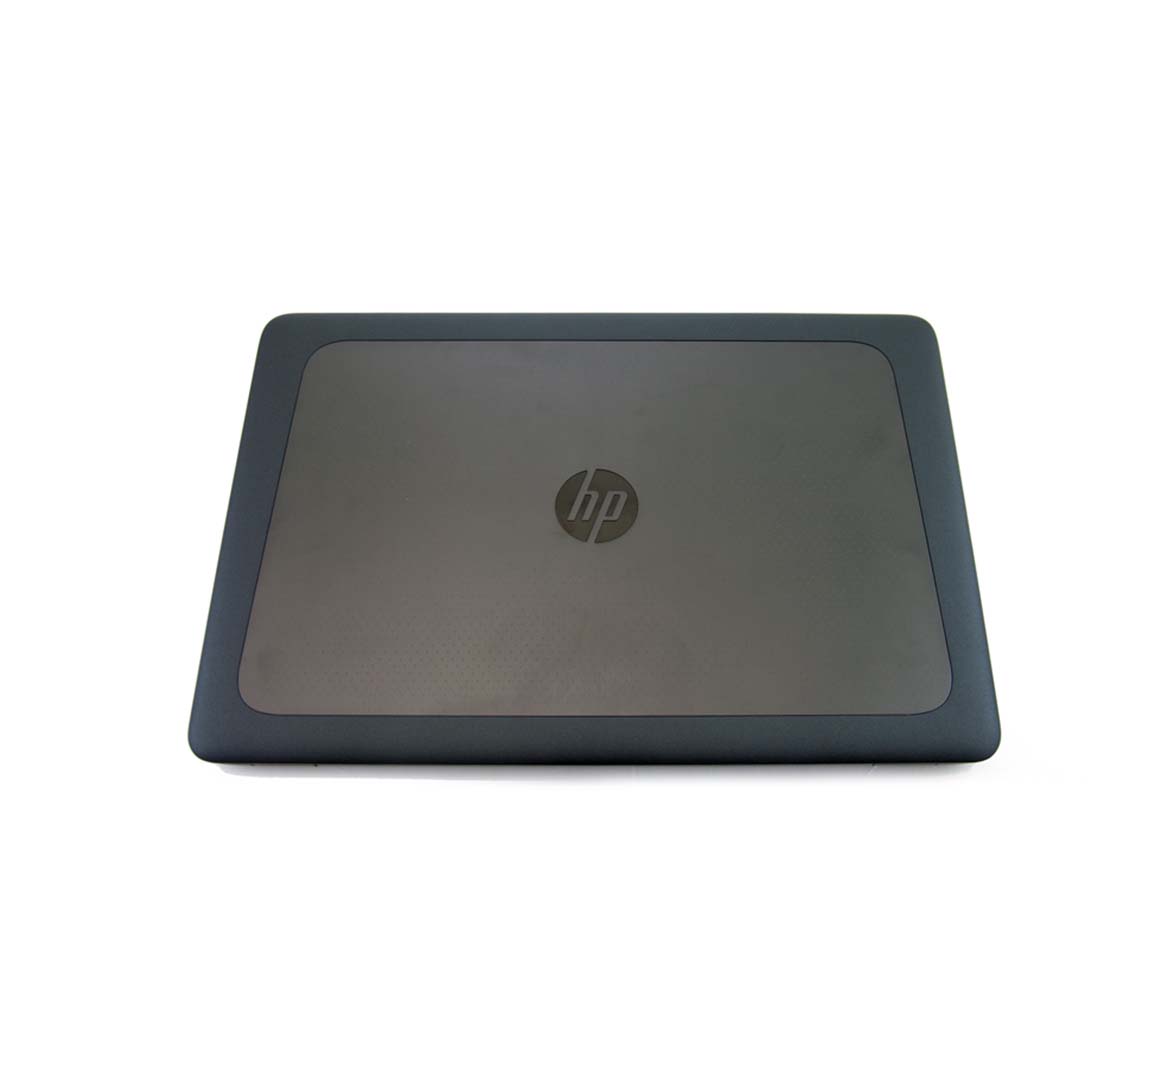 HP ZBook 15U G4  Business Laptop, Intel Core i7-6th Gen CPU, 16GB RAM, 512GB SSD, 15.6 inch Display, Windows 10 Pro, Refurbished Laptop